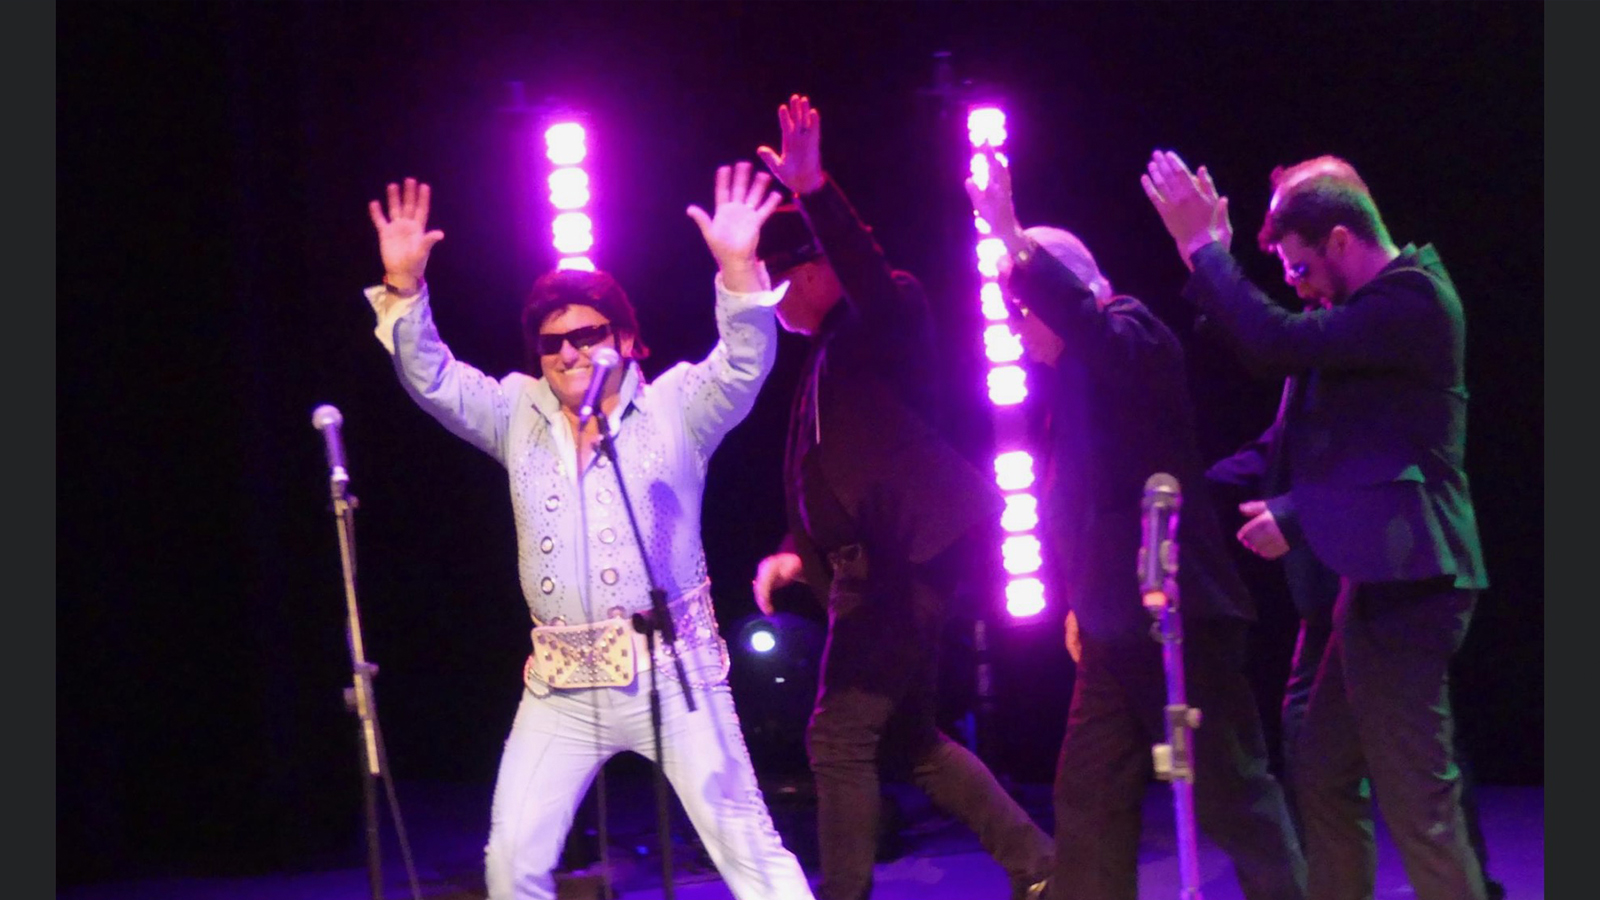 Keith Davies dressed as Elvis Presley on stage with purple lighting